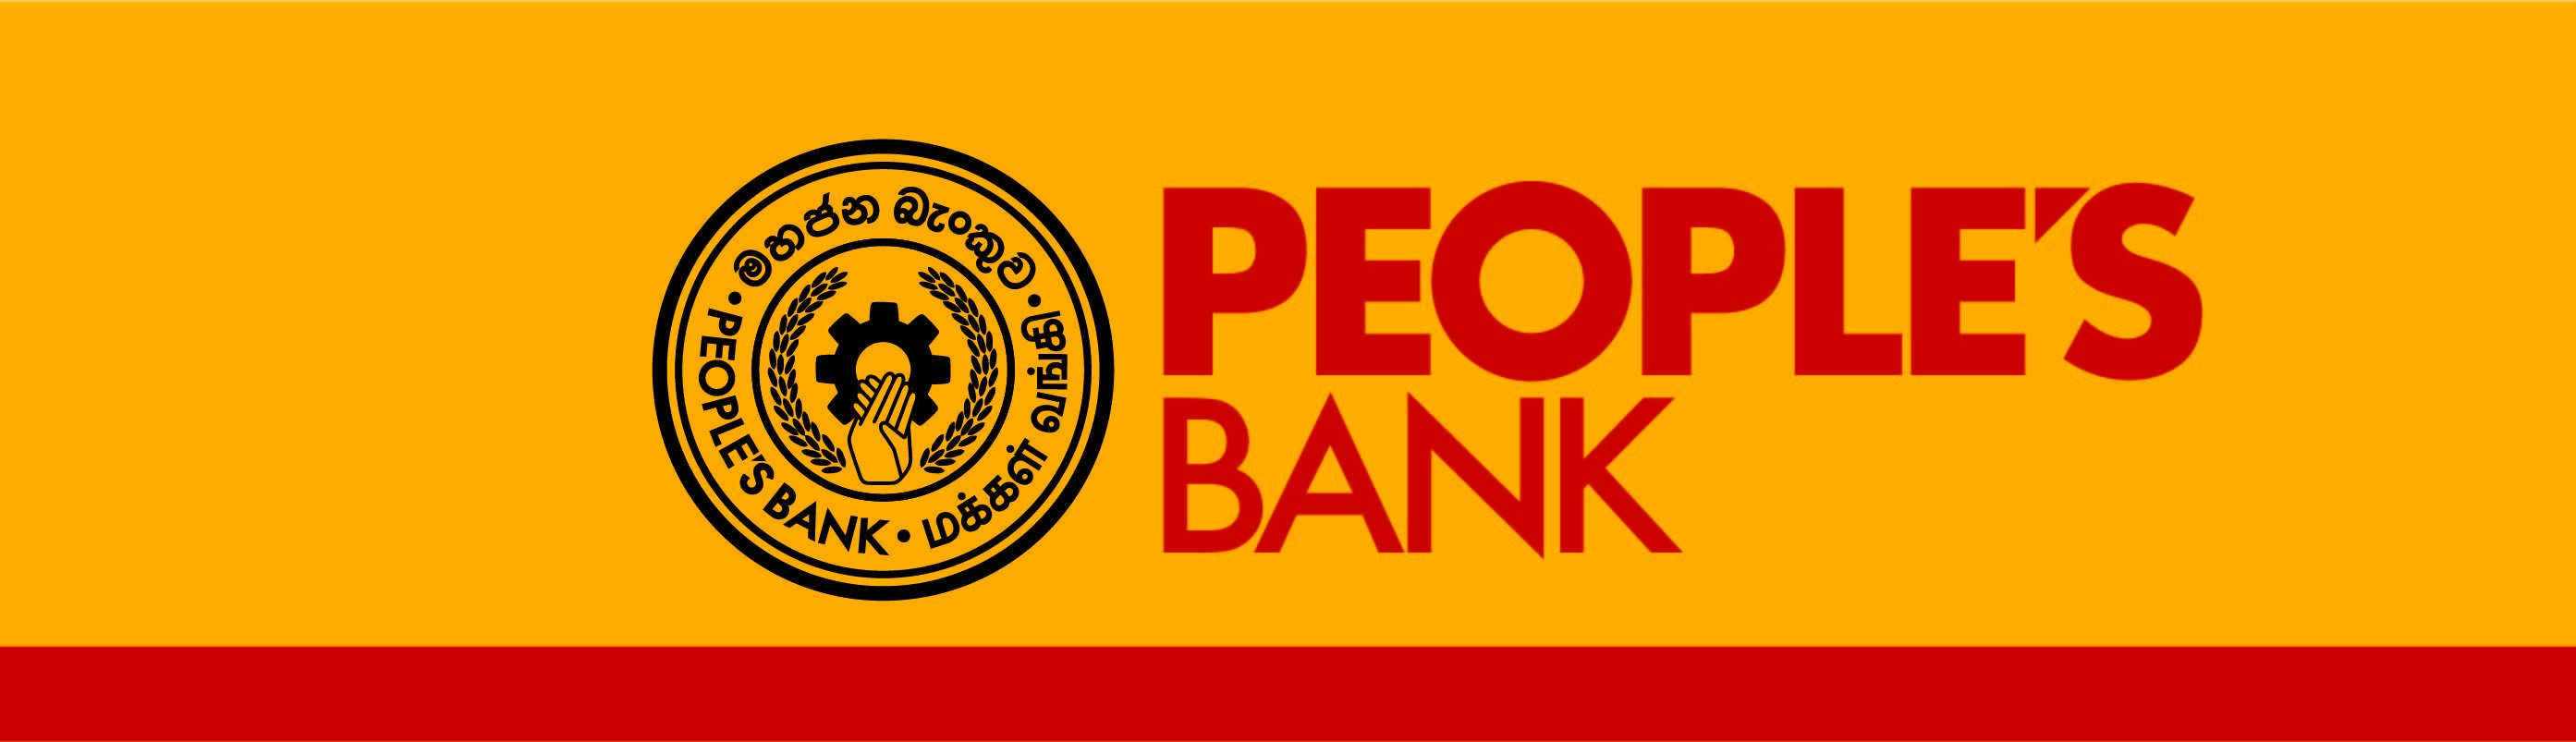 Peoples Telephone Logo - People's Bank (Sri Lanka)